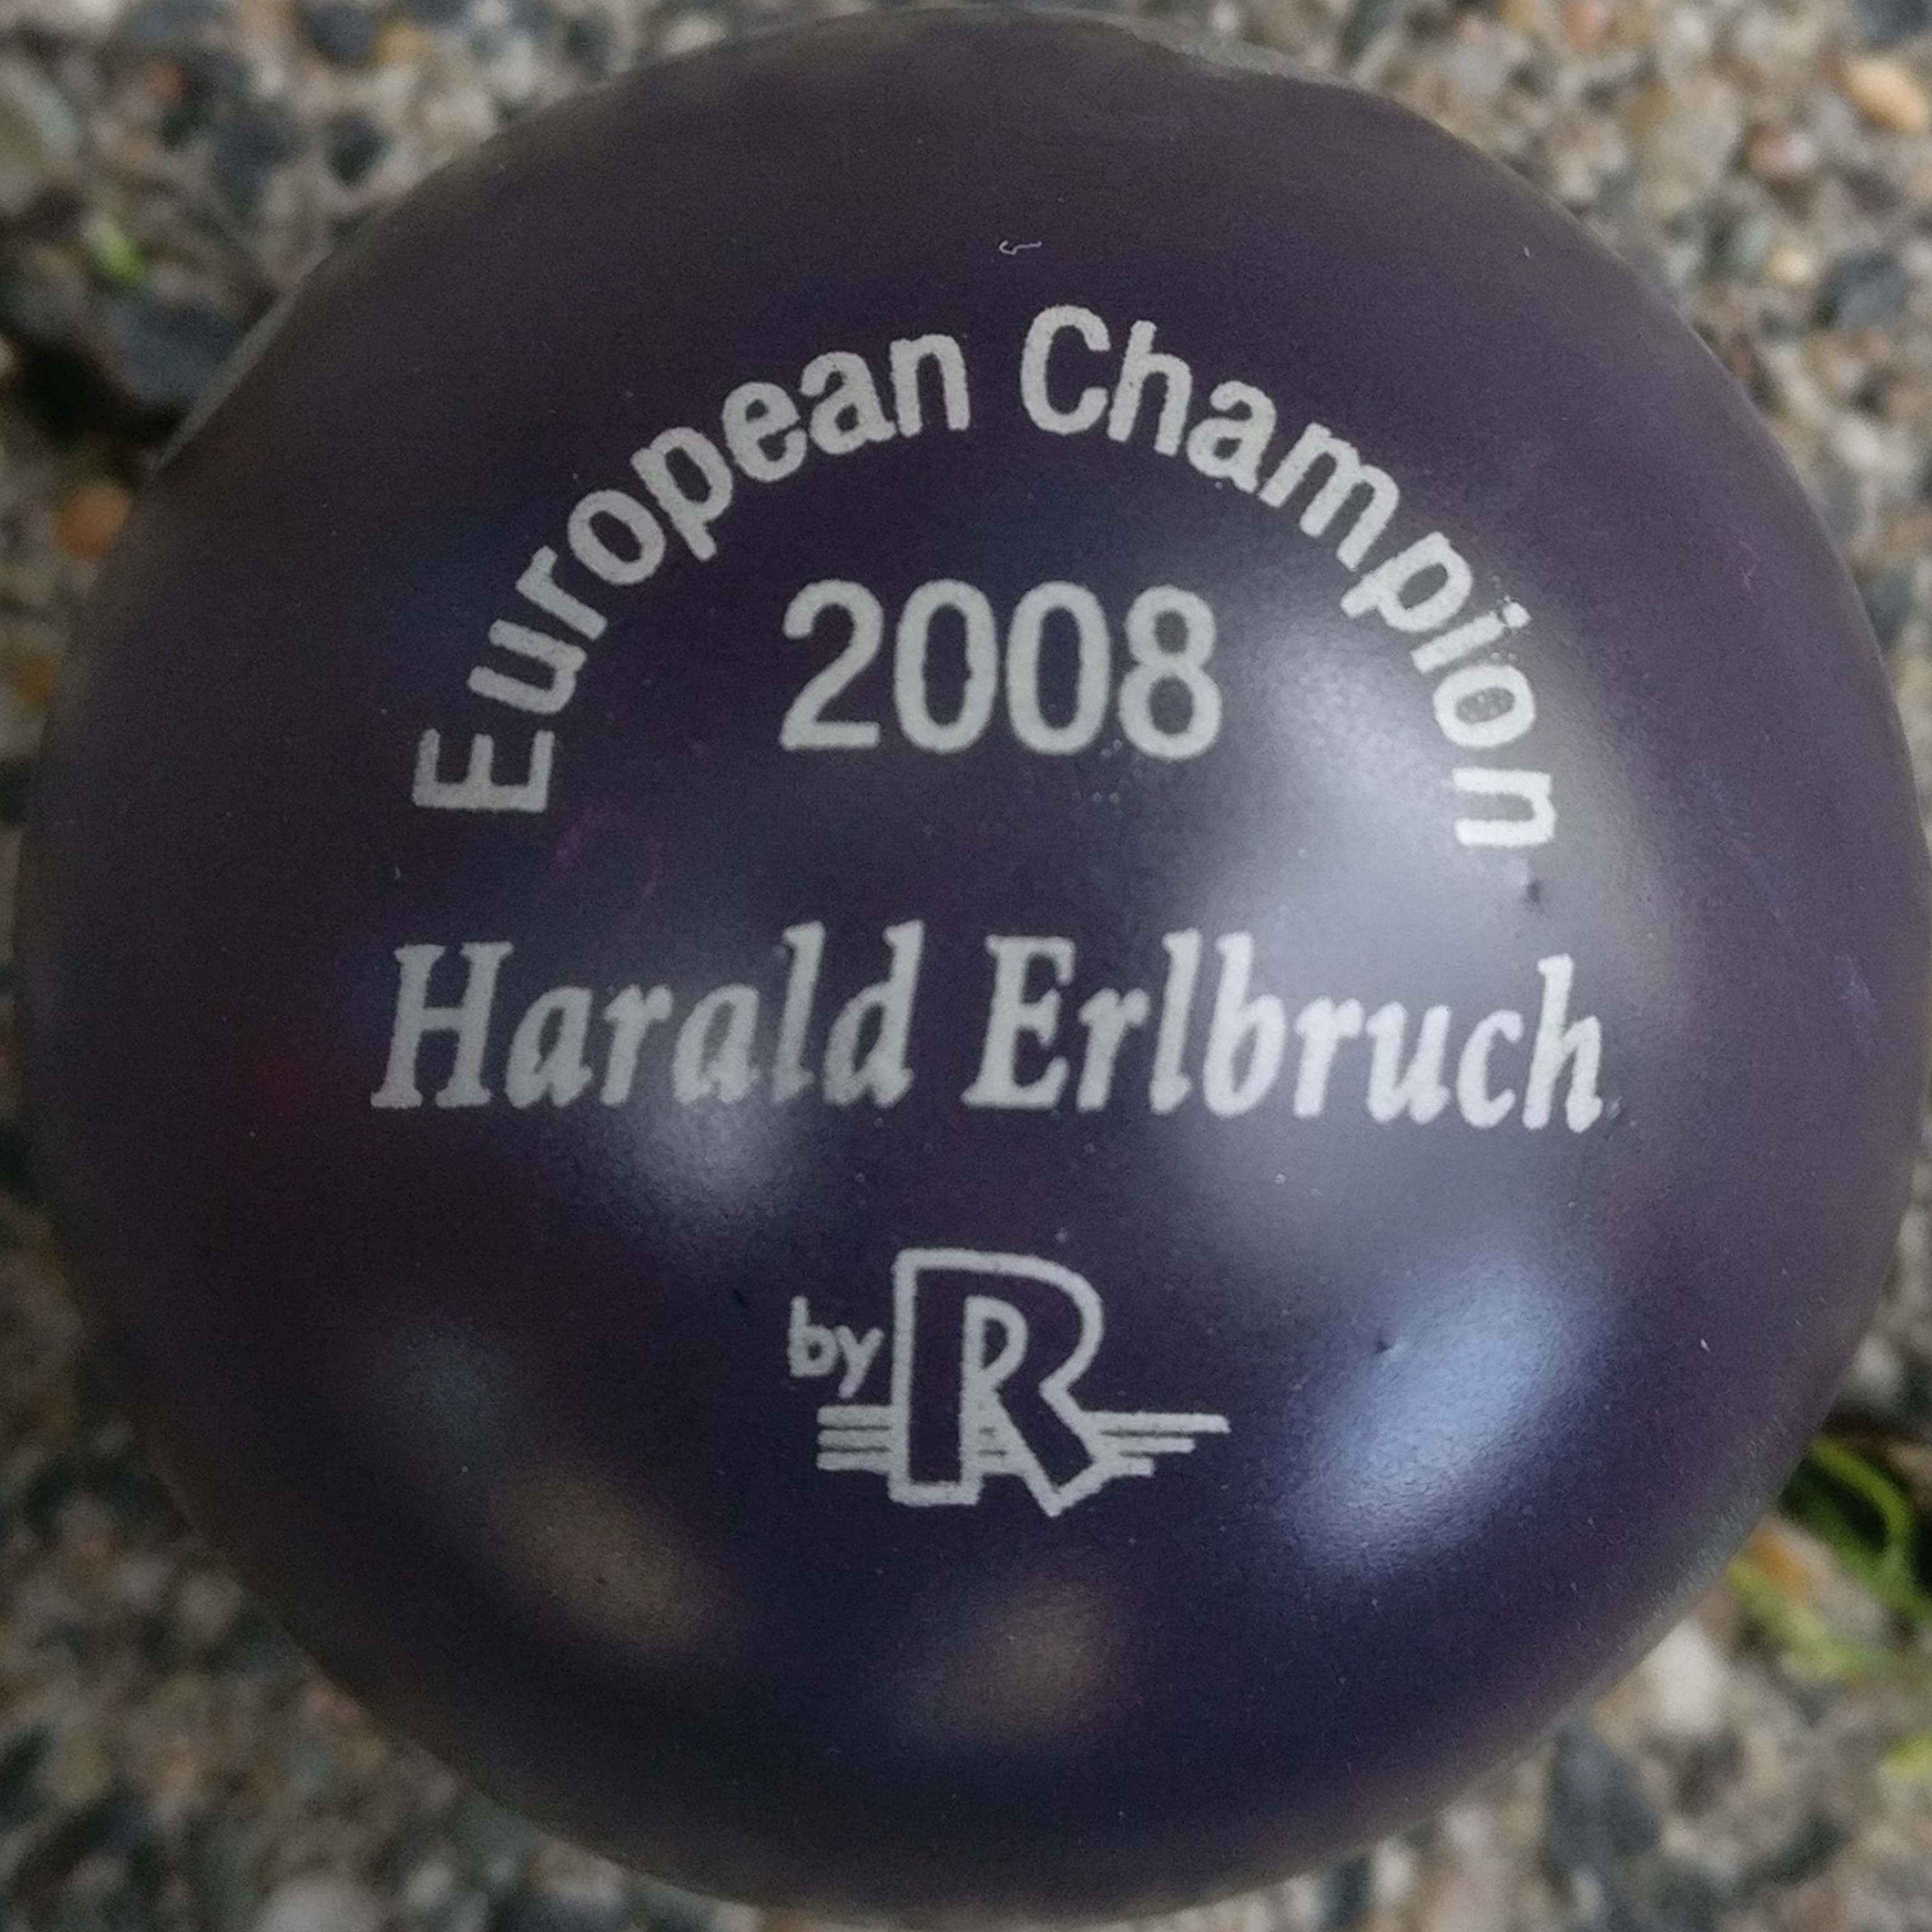 european_champion_2008_harald_erlbruch_dunkel-lila.jpg